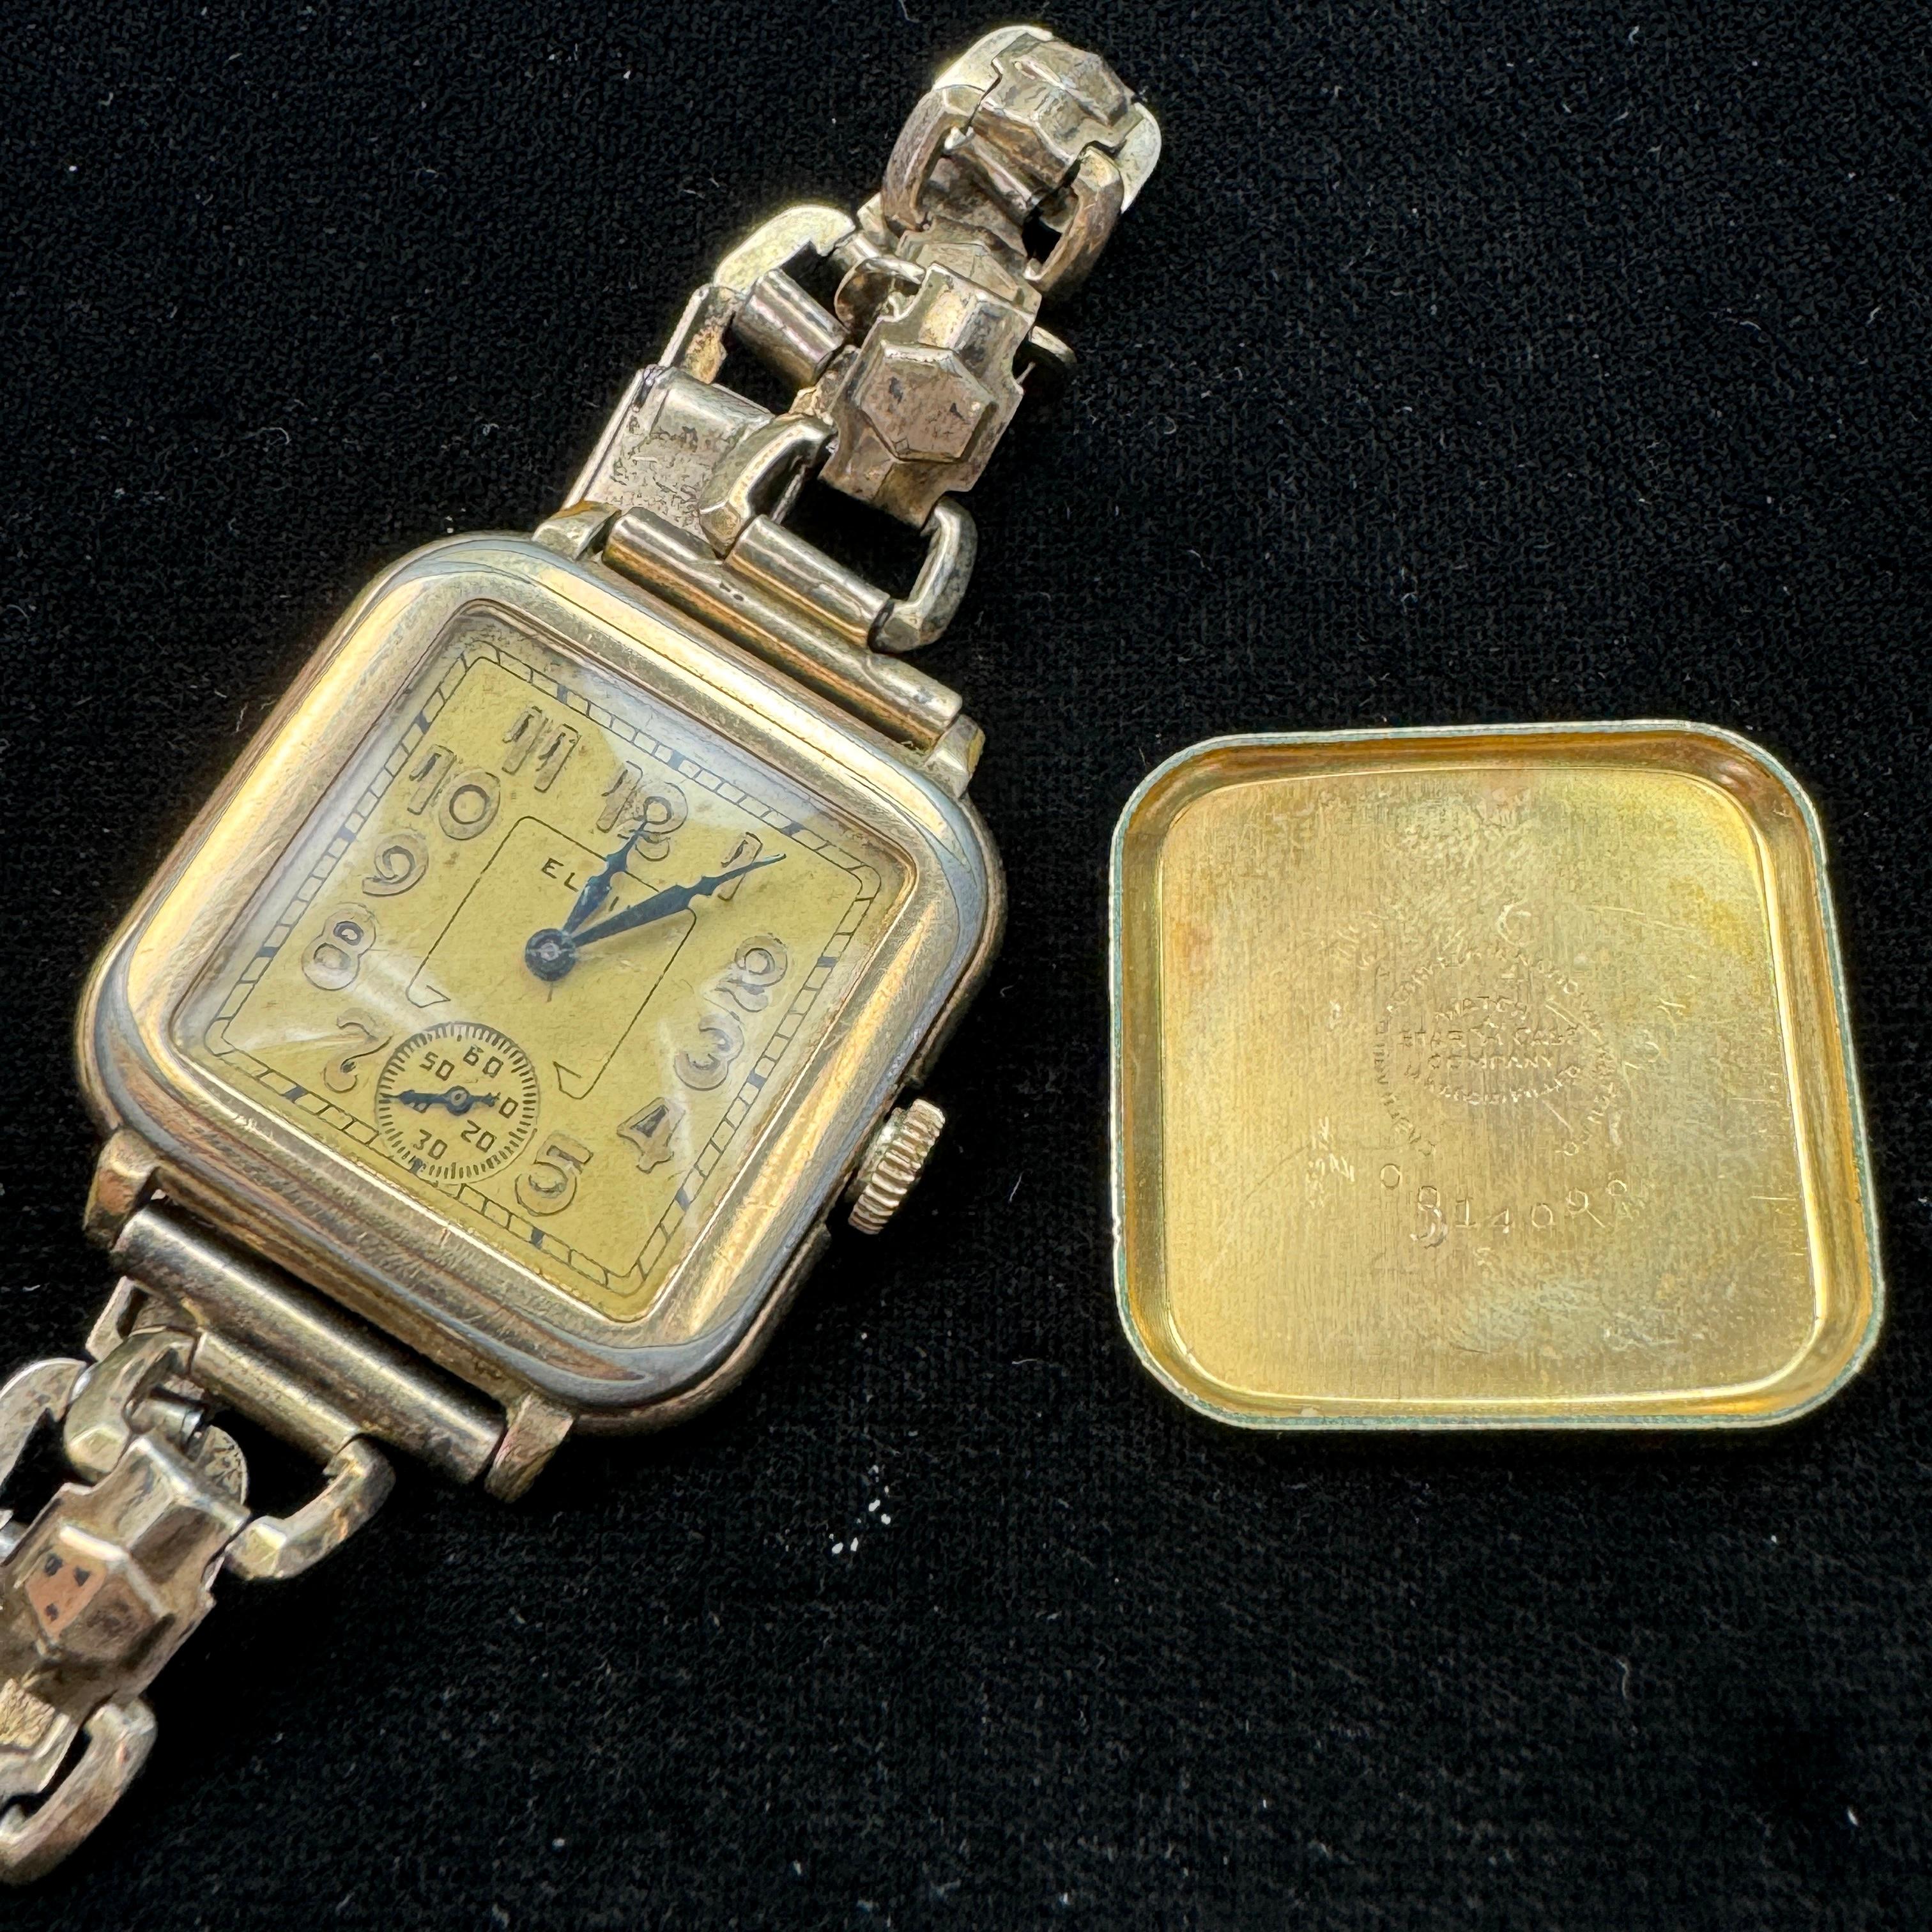 Circa 1934 15-jewel Elgin model 1 transitional wristwatch